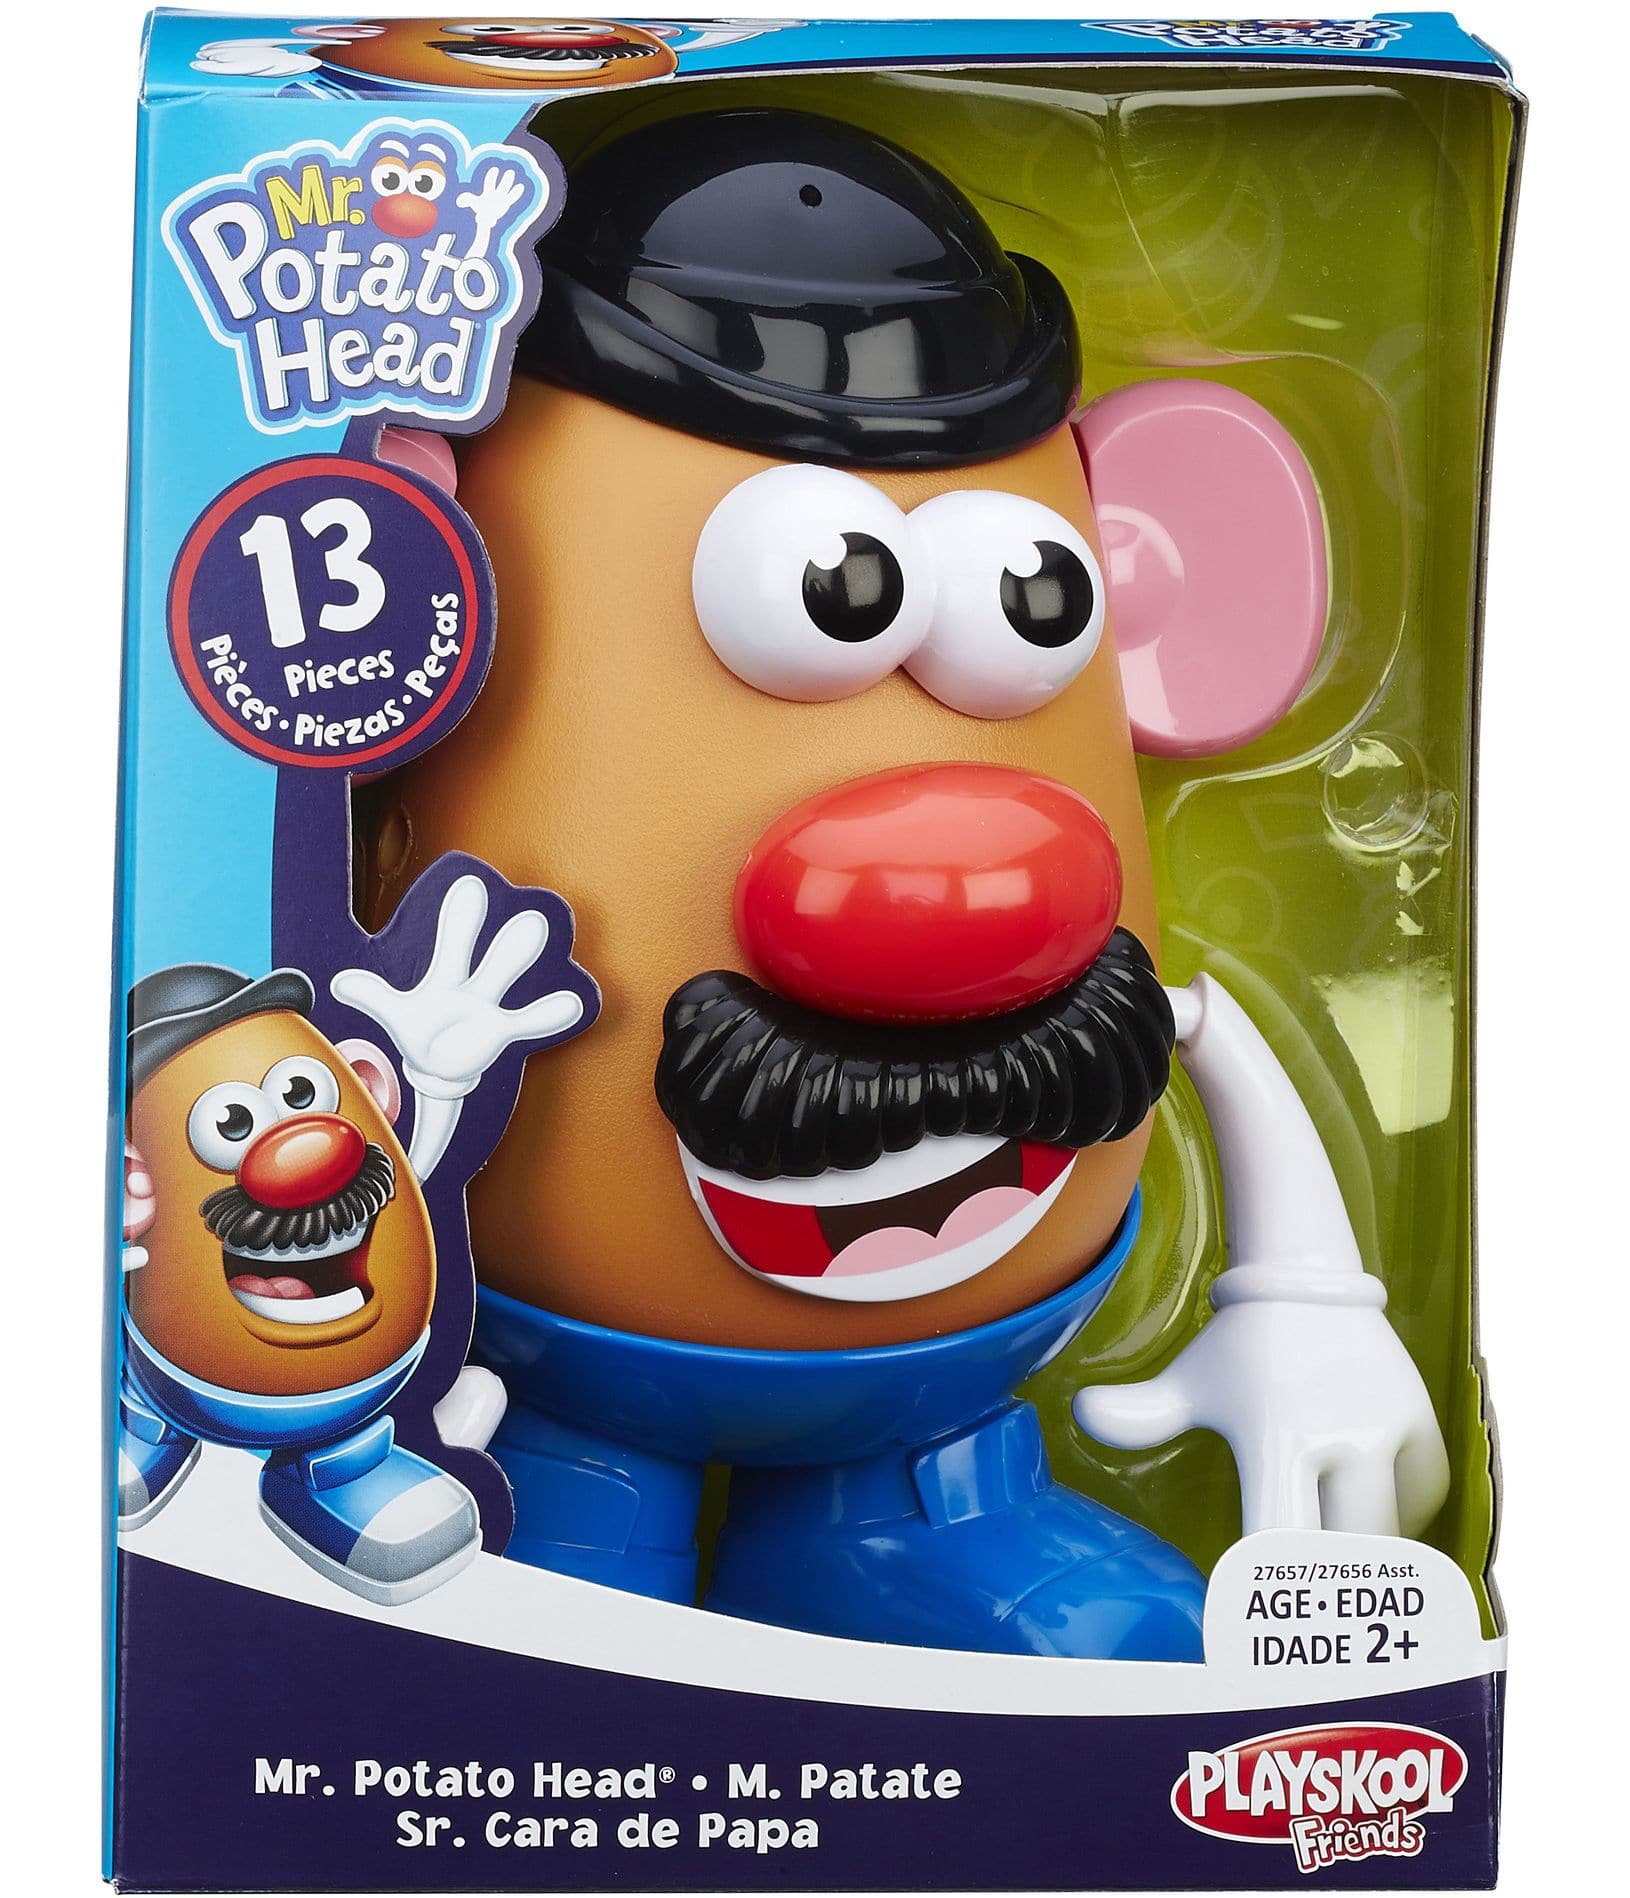 Mr. Potato Head Toys for sale in Quebec, Quebec